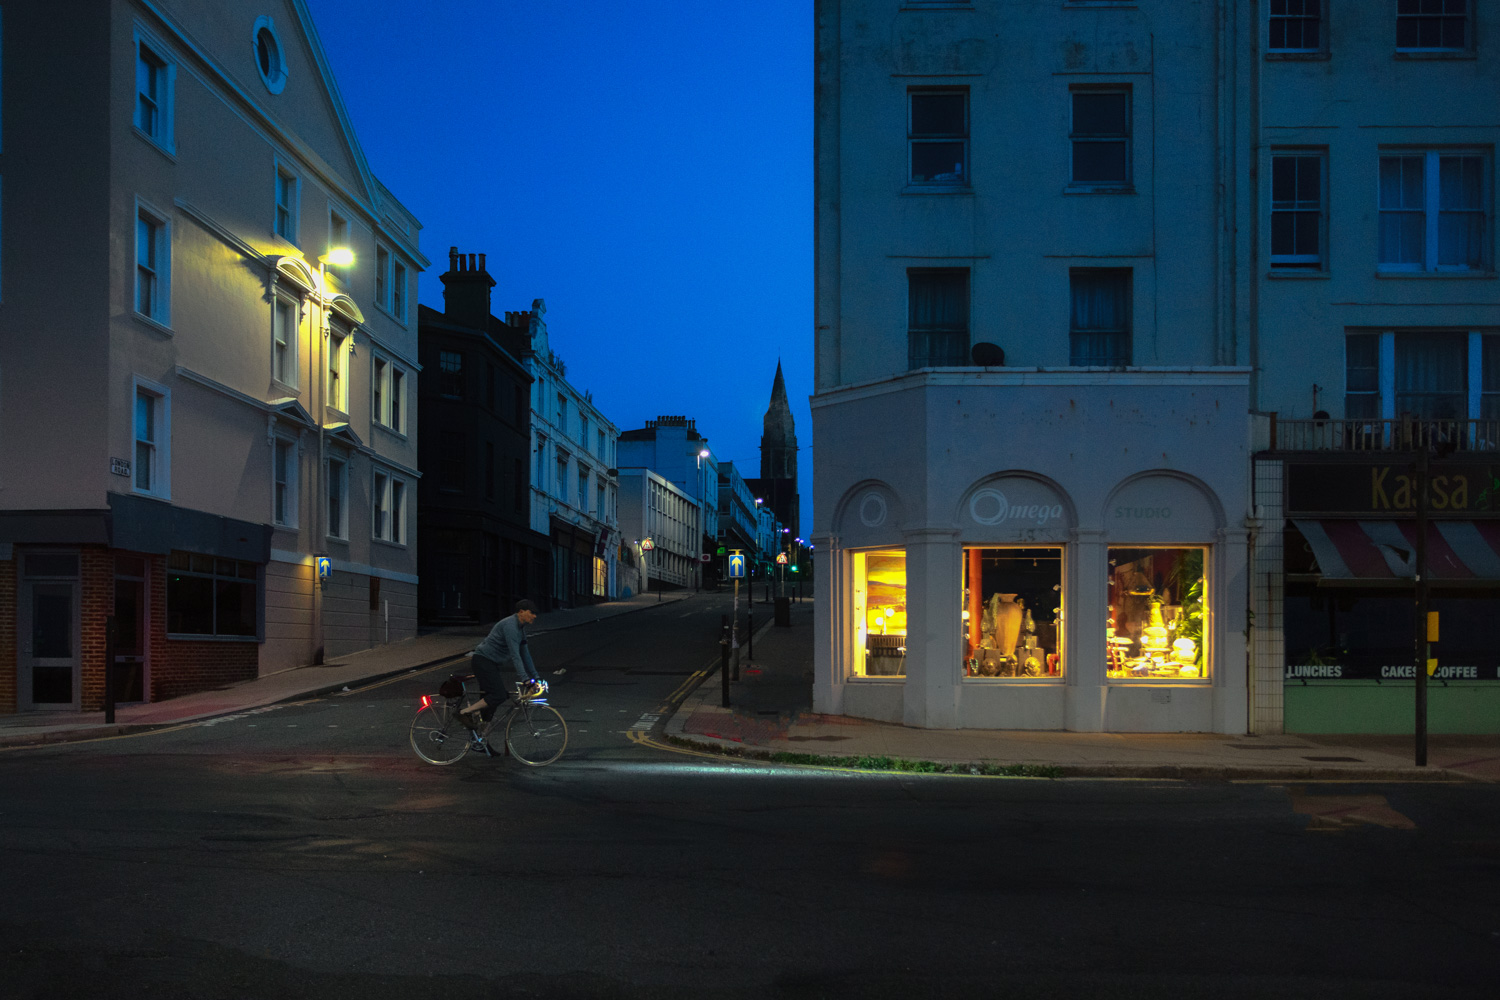 Nighthawk - A Bouquet to Edward Hopper. A cyclist pedals past a dark urban street corner l